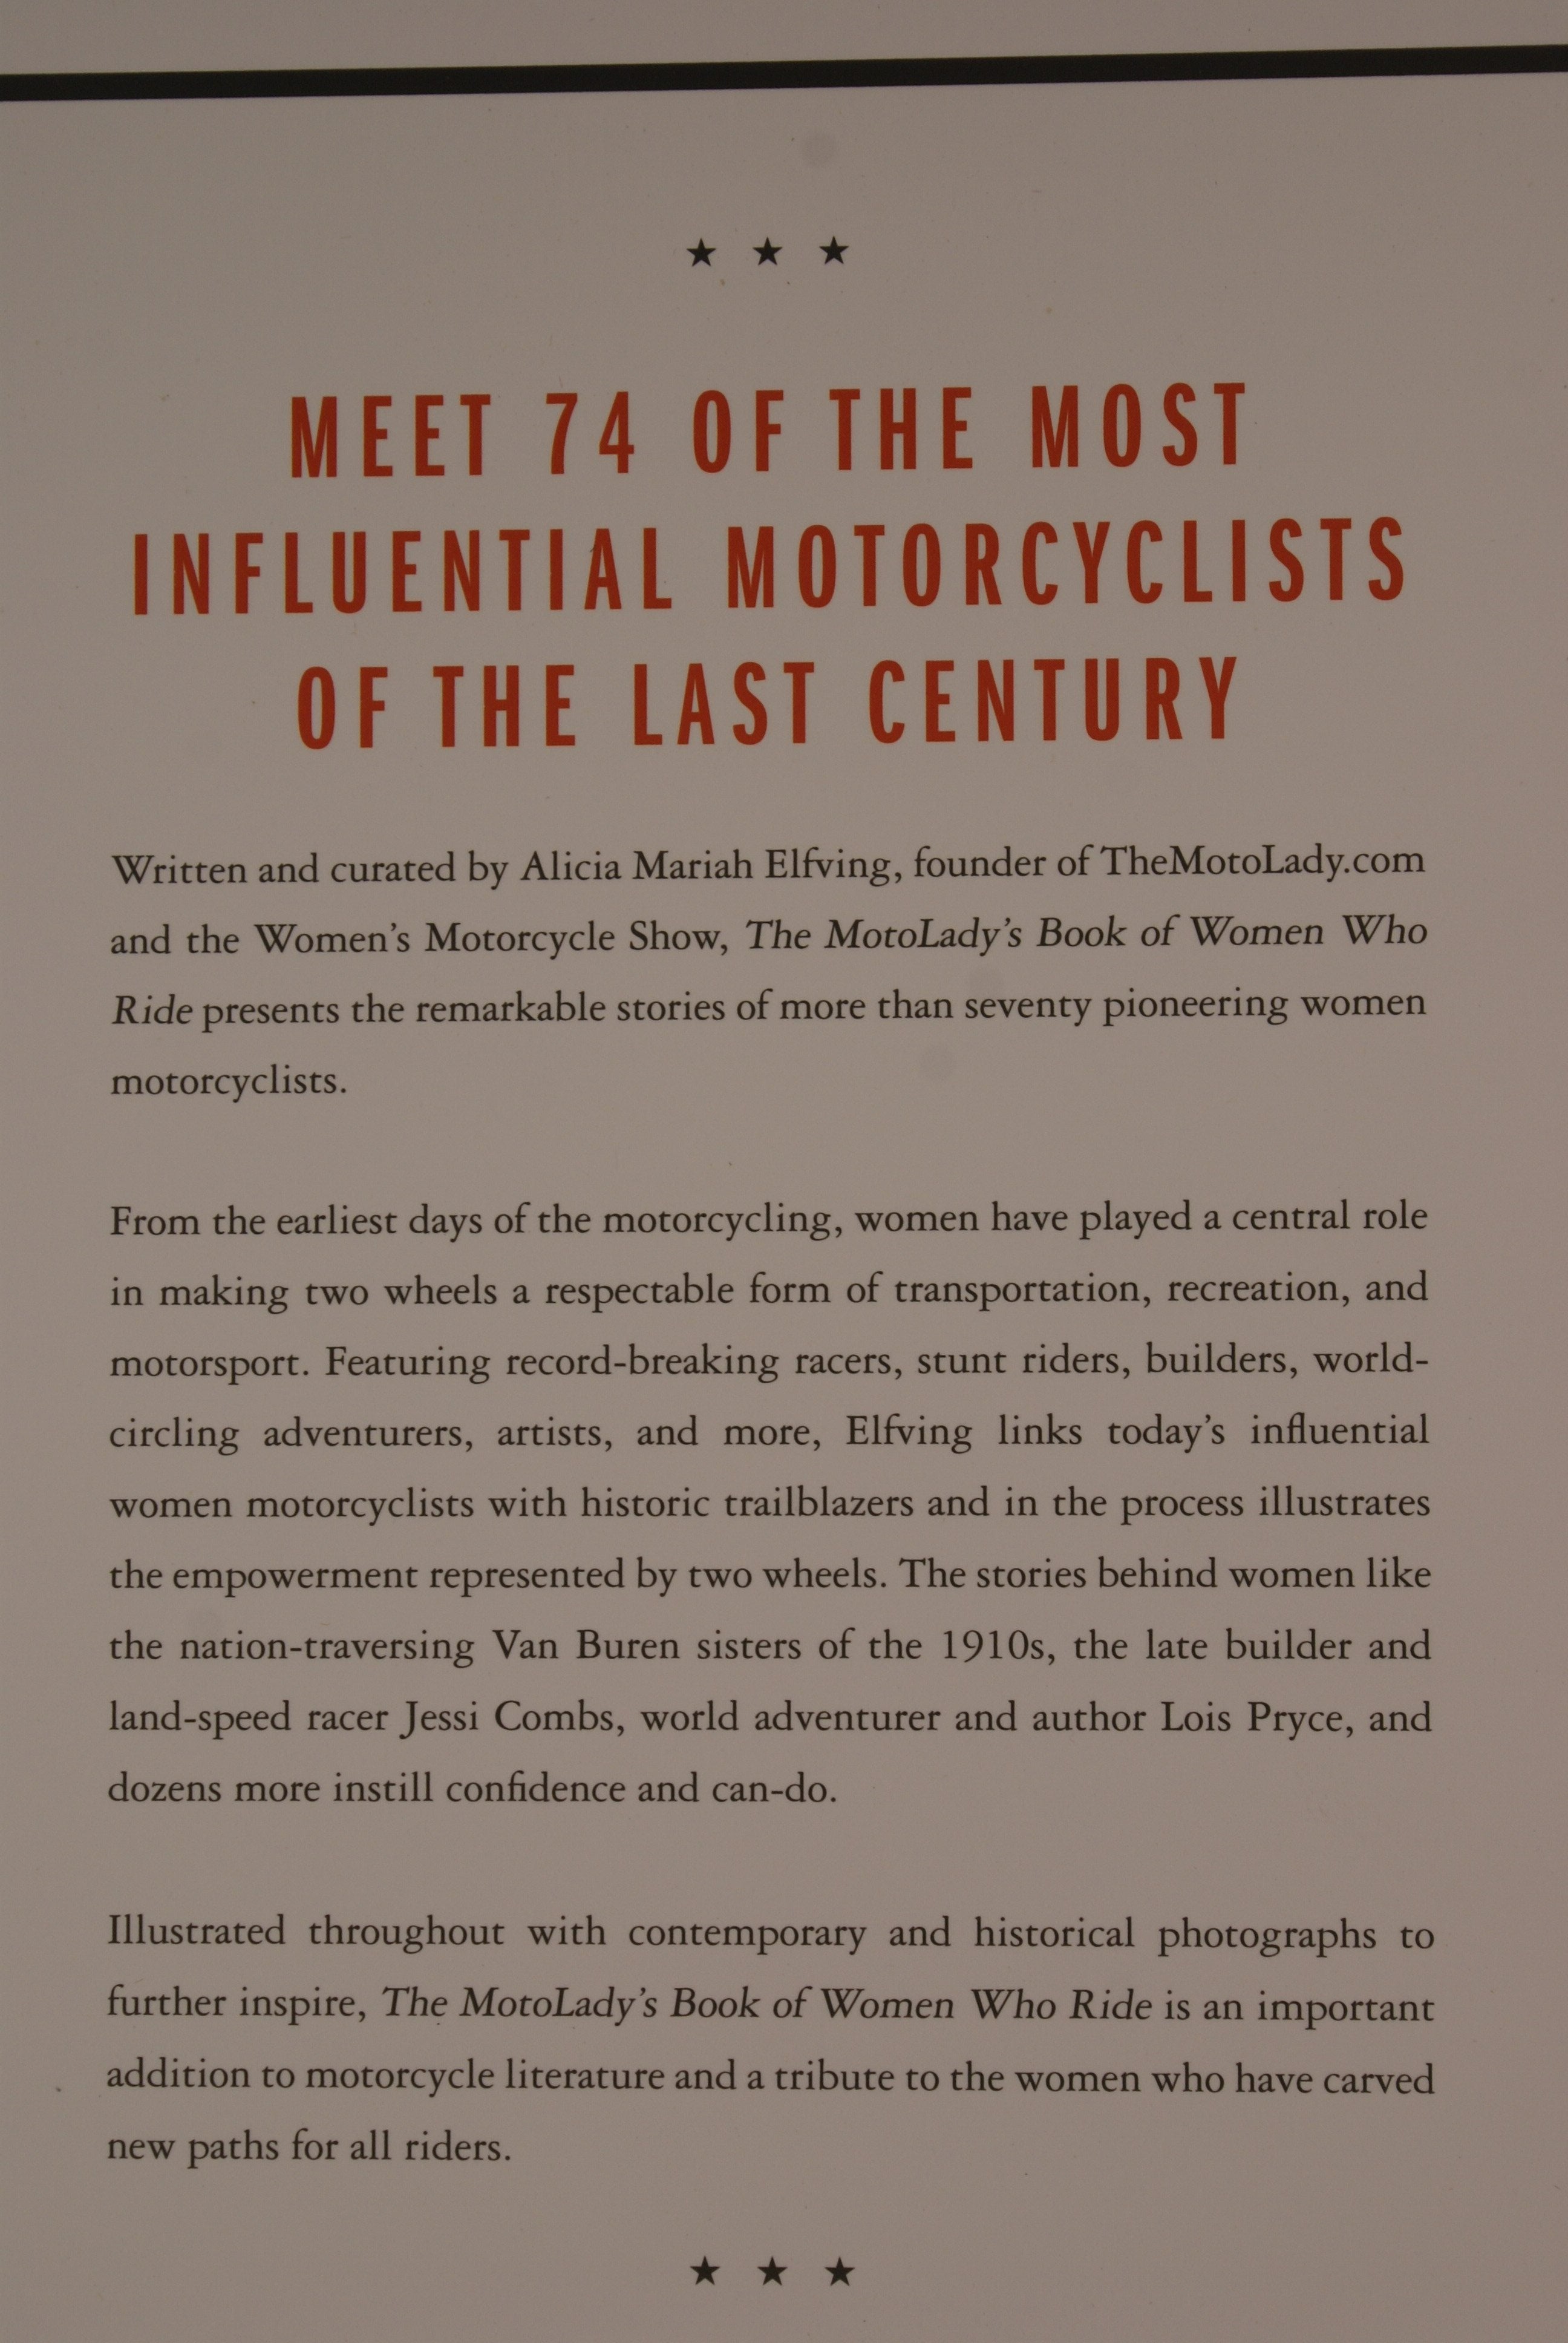 Motolady's book of women who ride